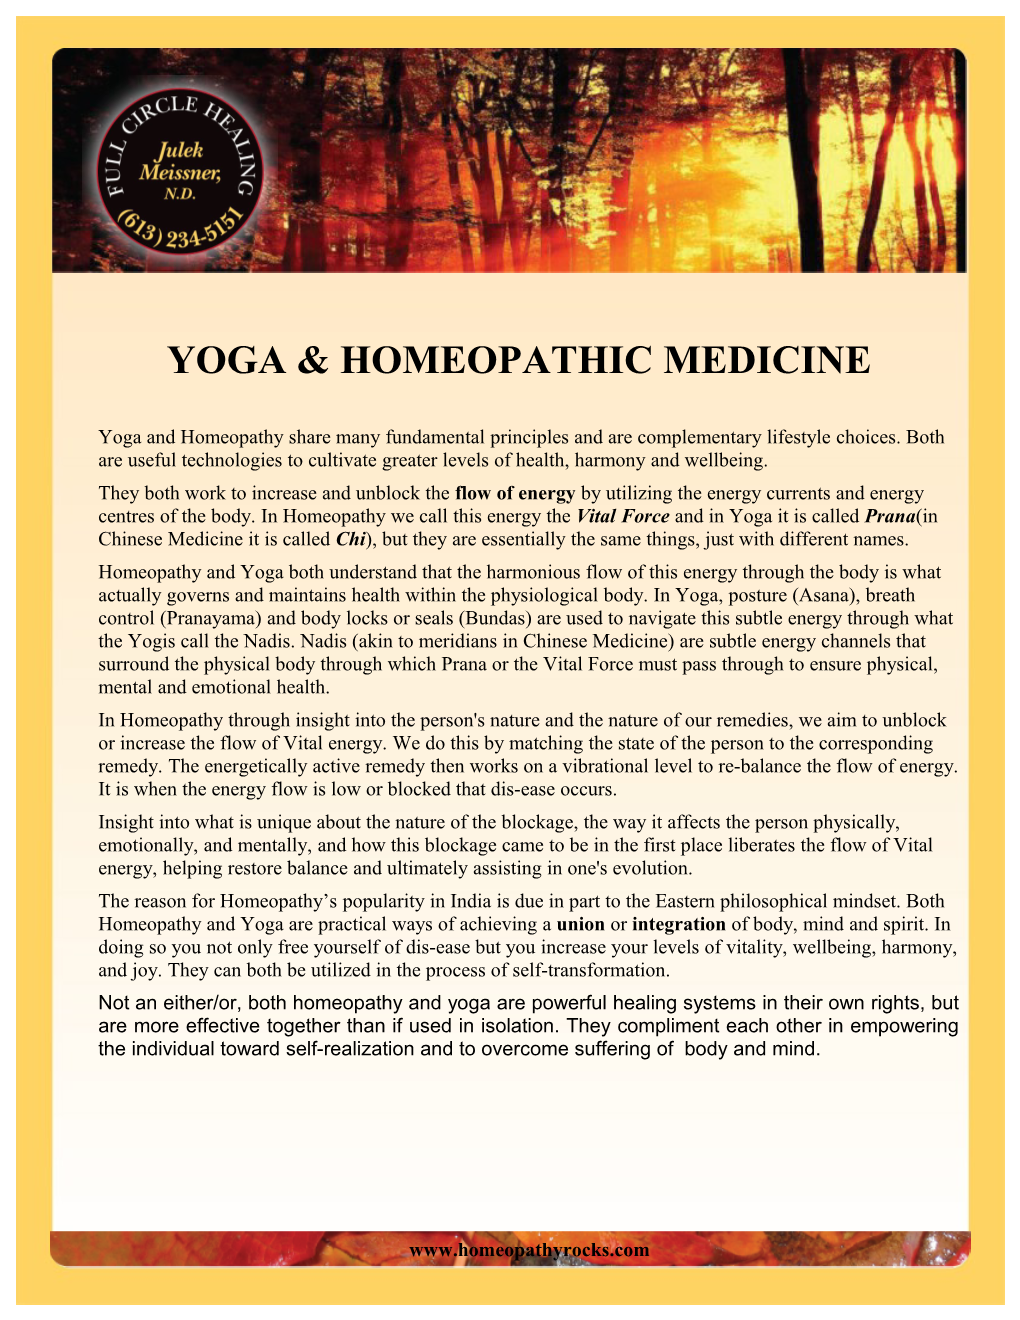 Yoga & Homeopathic Medicine